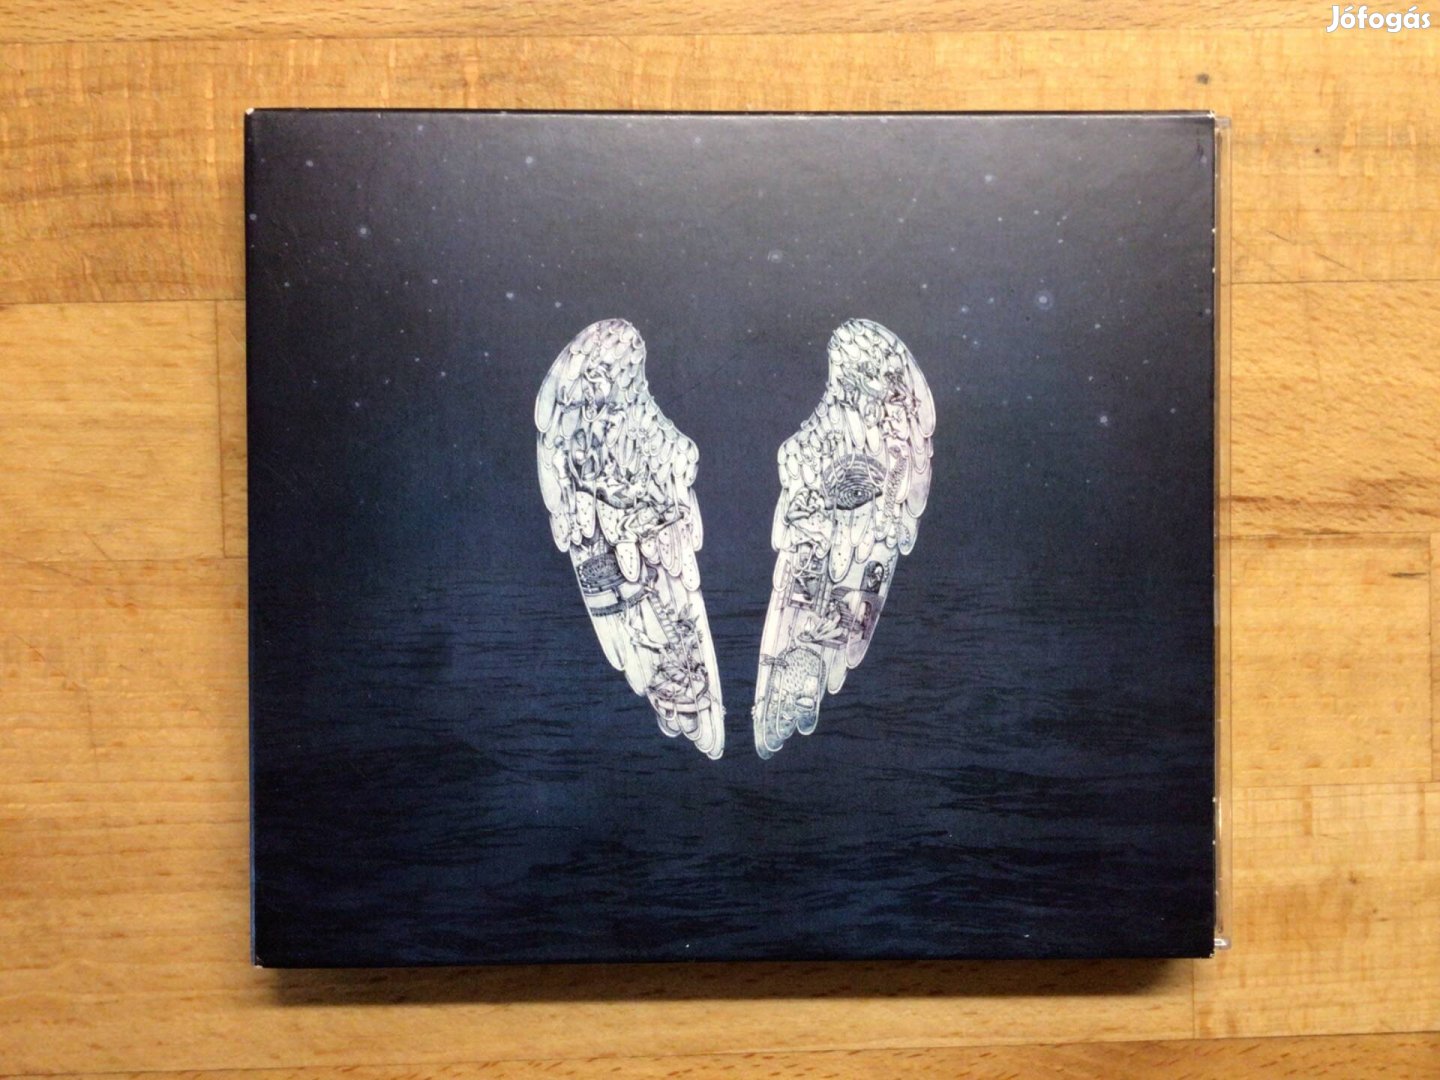 Coldplay - Ghost Stories, cd lemez